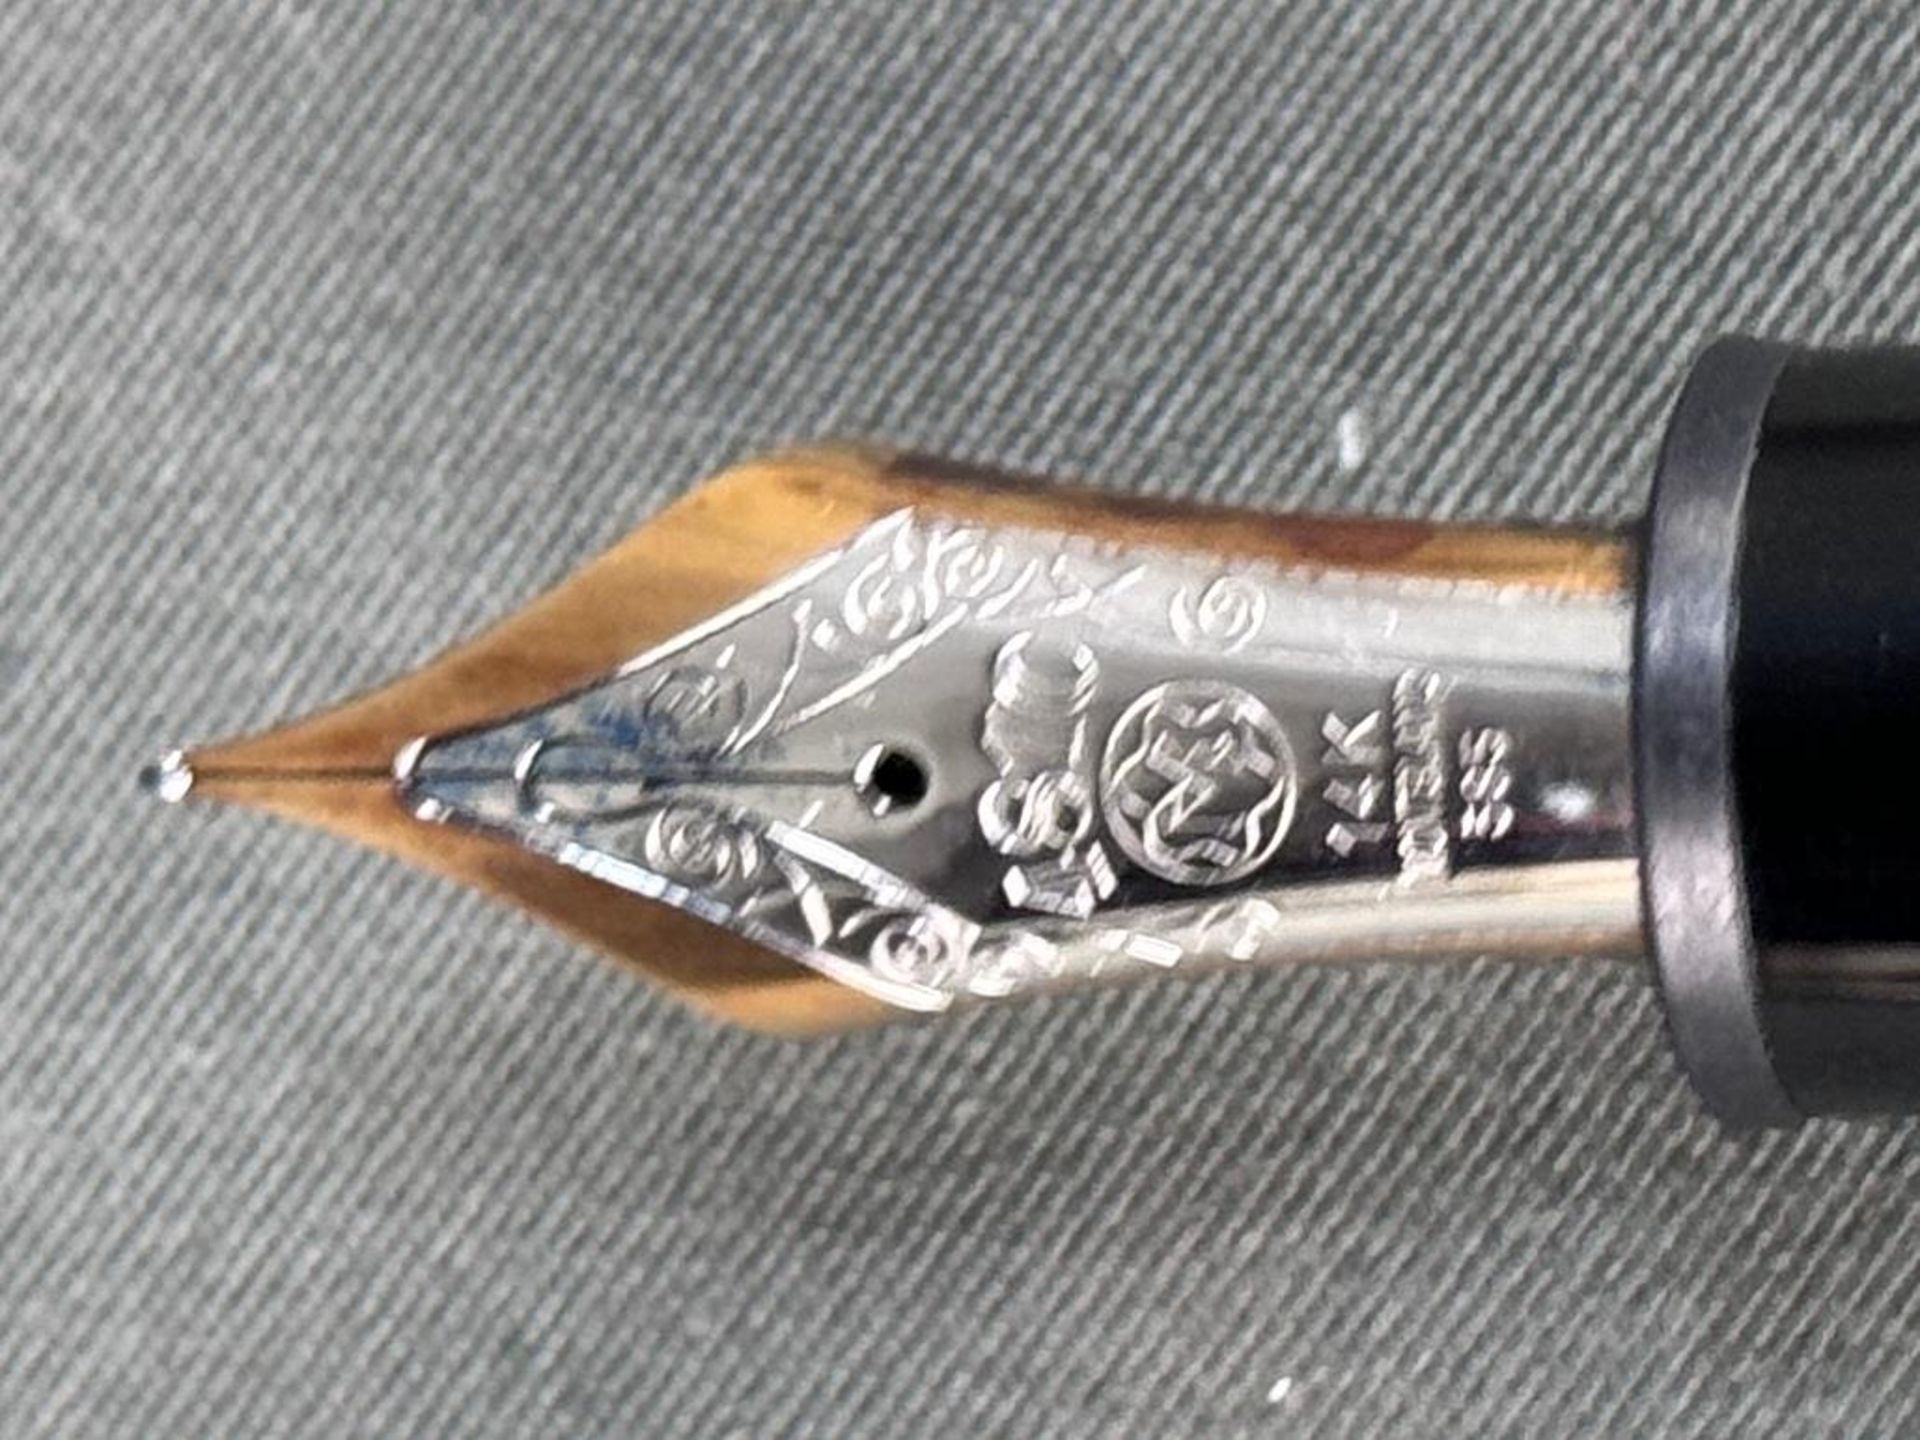 Montblanc fountain pen, Meisterstück No 149, 585/14K gold nib, barrel made of black precious resin - Image 3 of 3